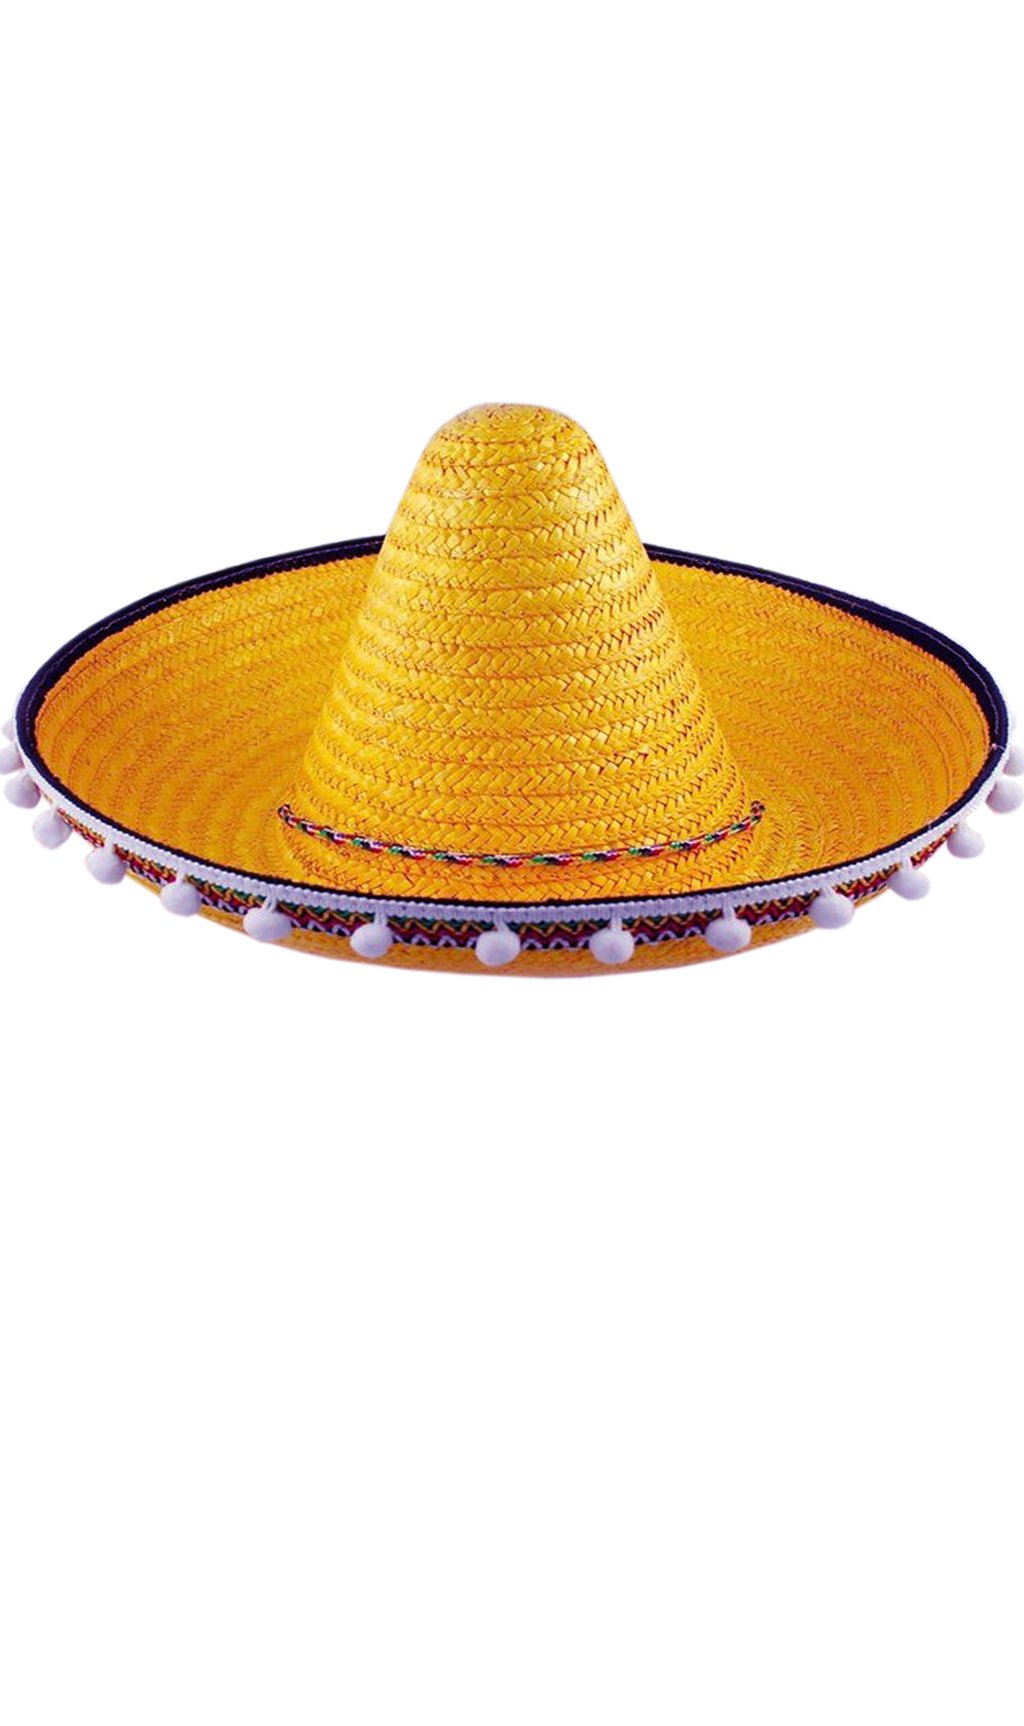 Sombrero Mexicano Mediano Amarillo